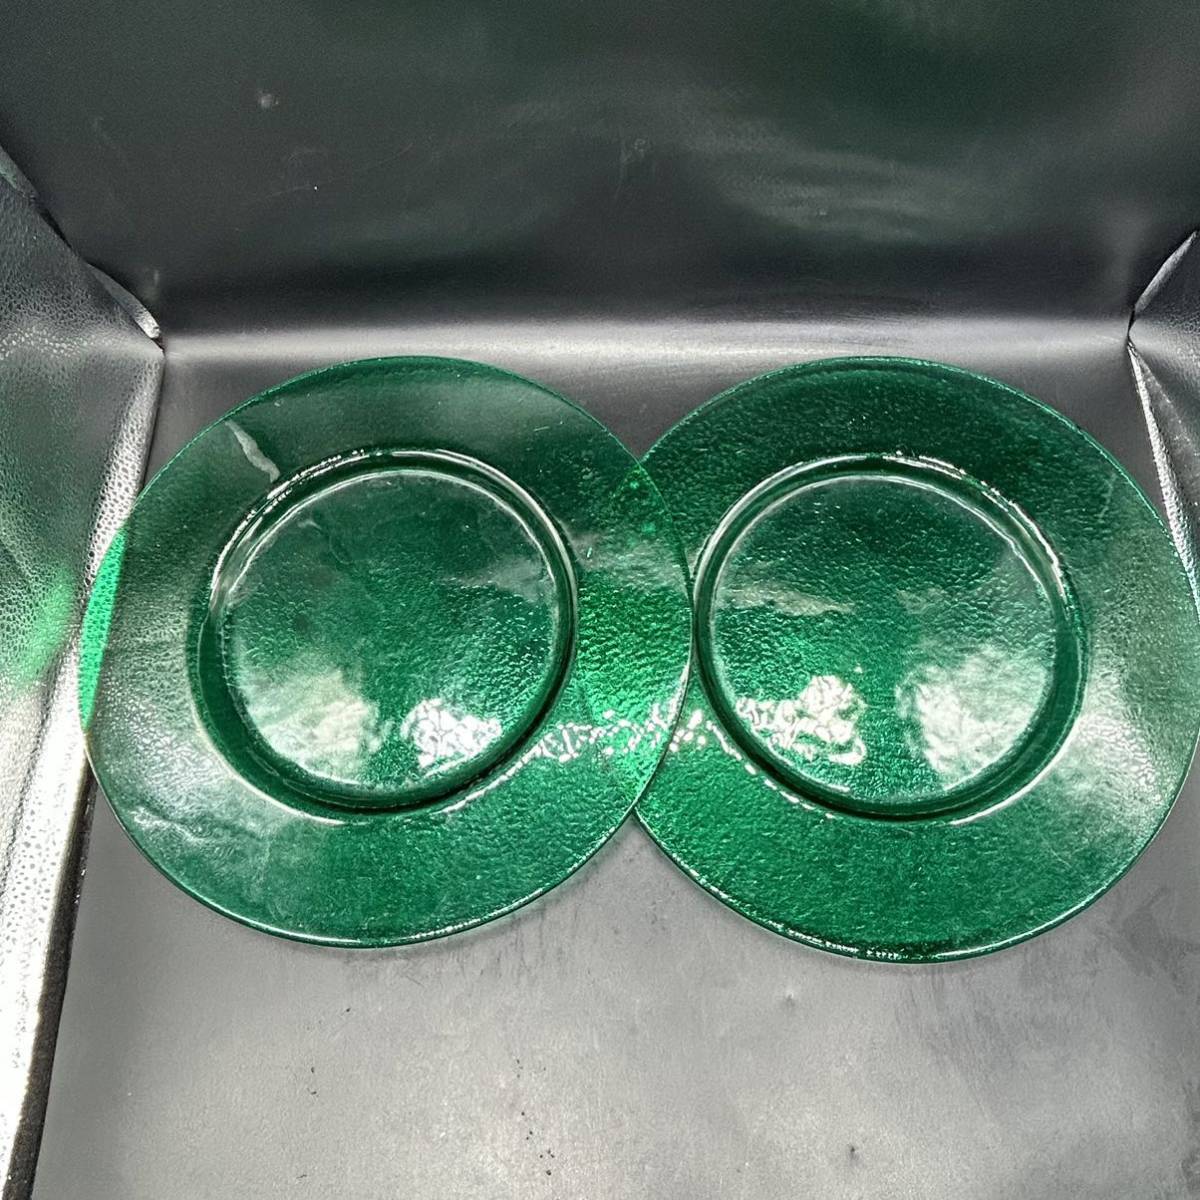 IVV Сделано в Италии Стеклянная тарелка Стеклянная тарелка Ручная работа Зеленая тарелка Посуда Helix Посуда в стиле вестерн H10, Западная посуда, тарелка, блюдо, другие